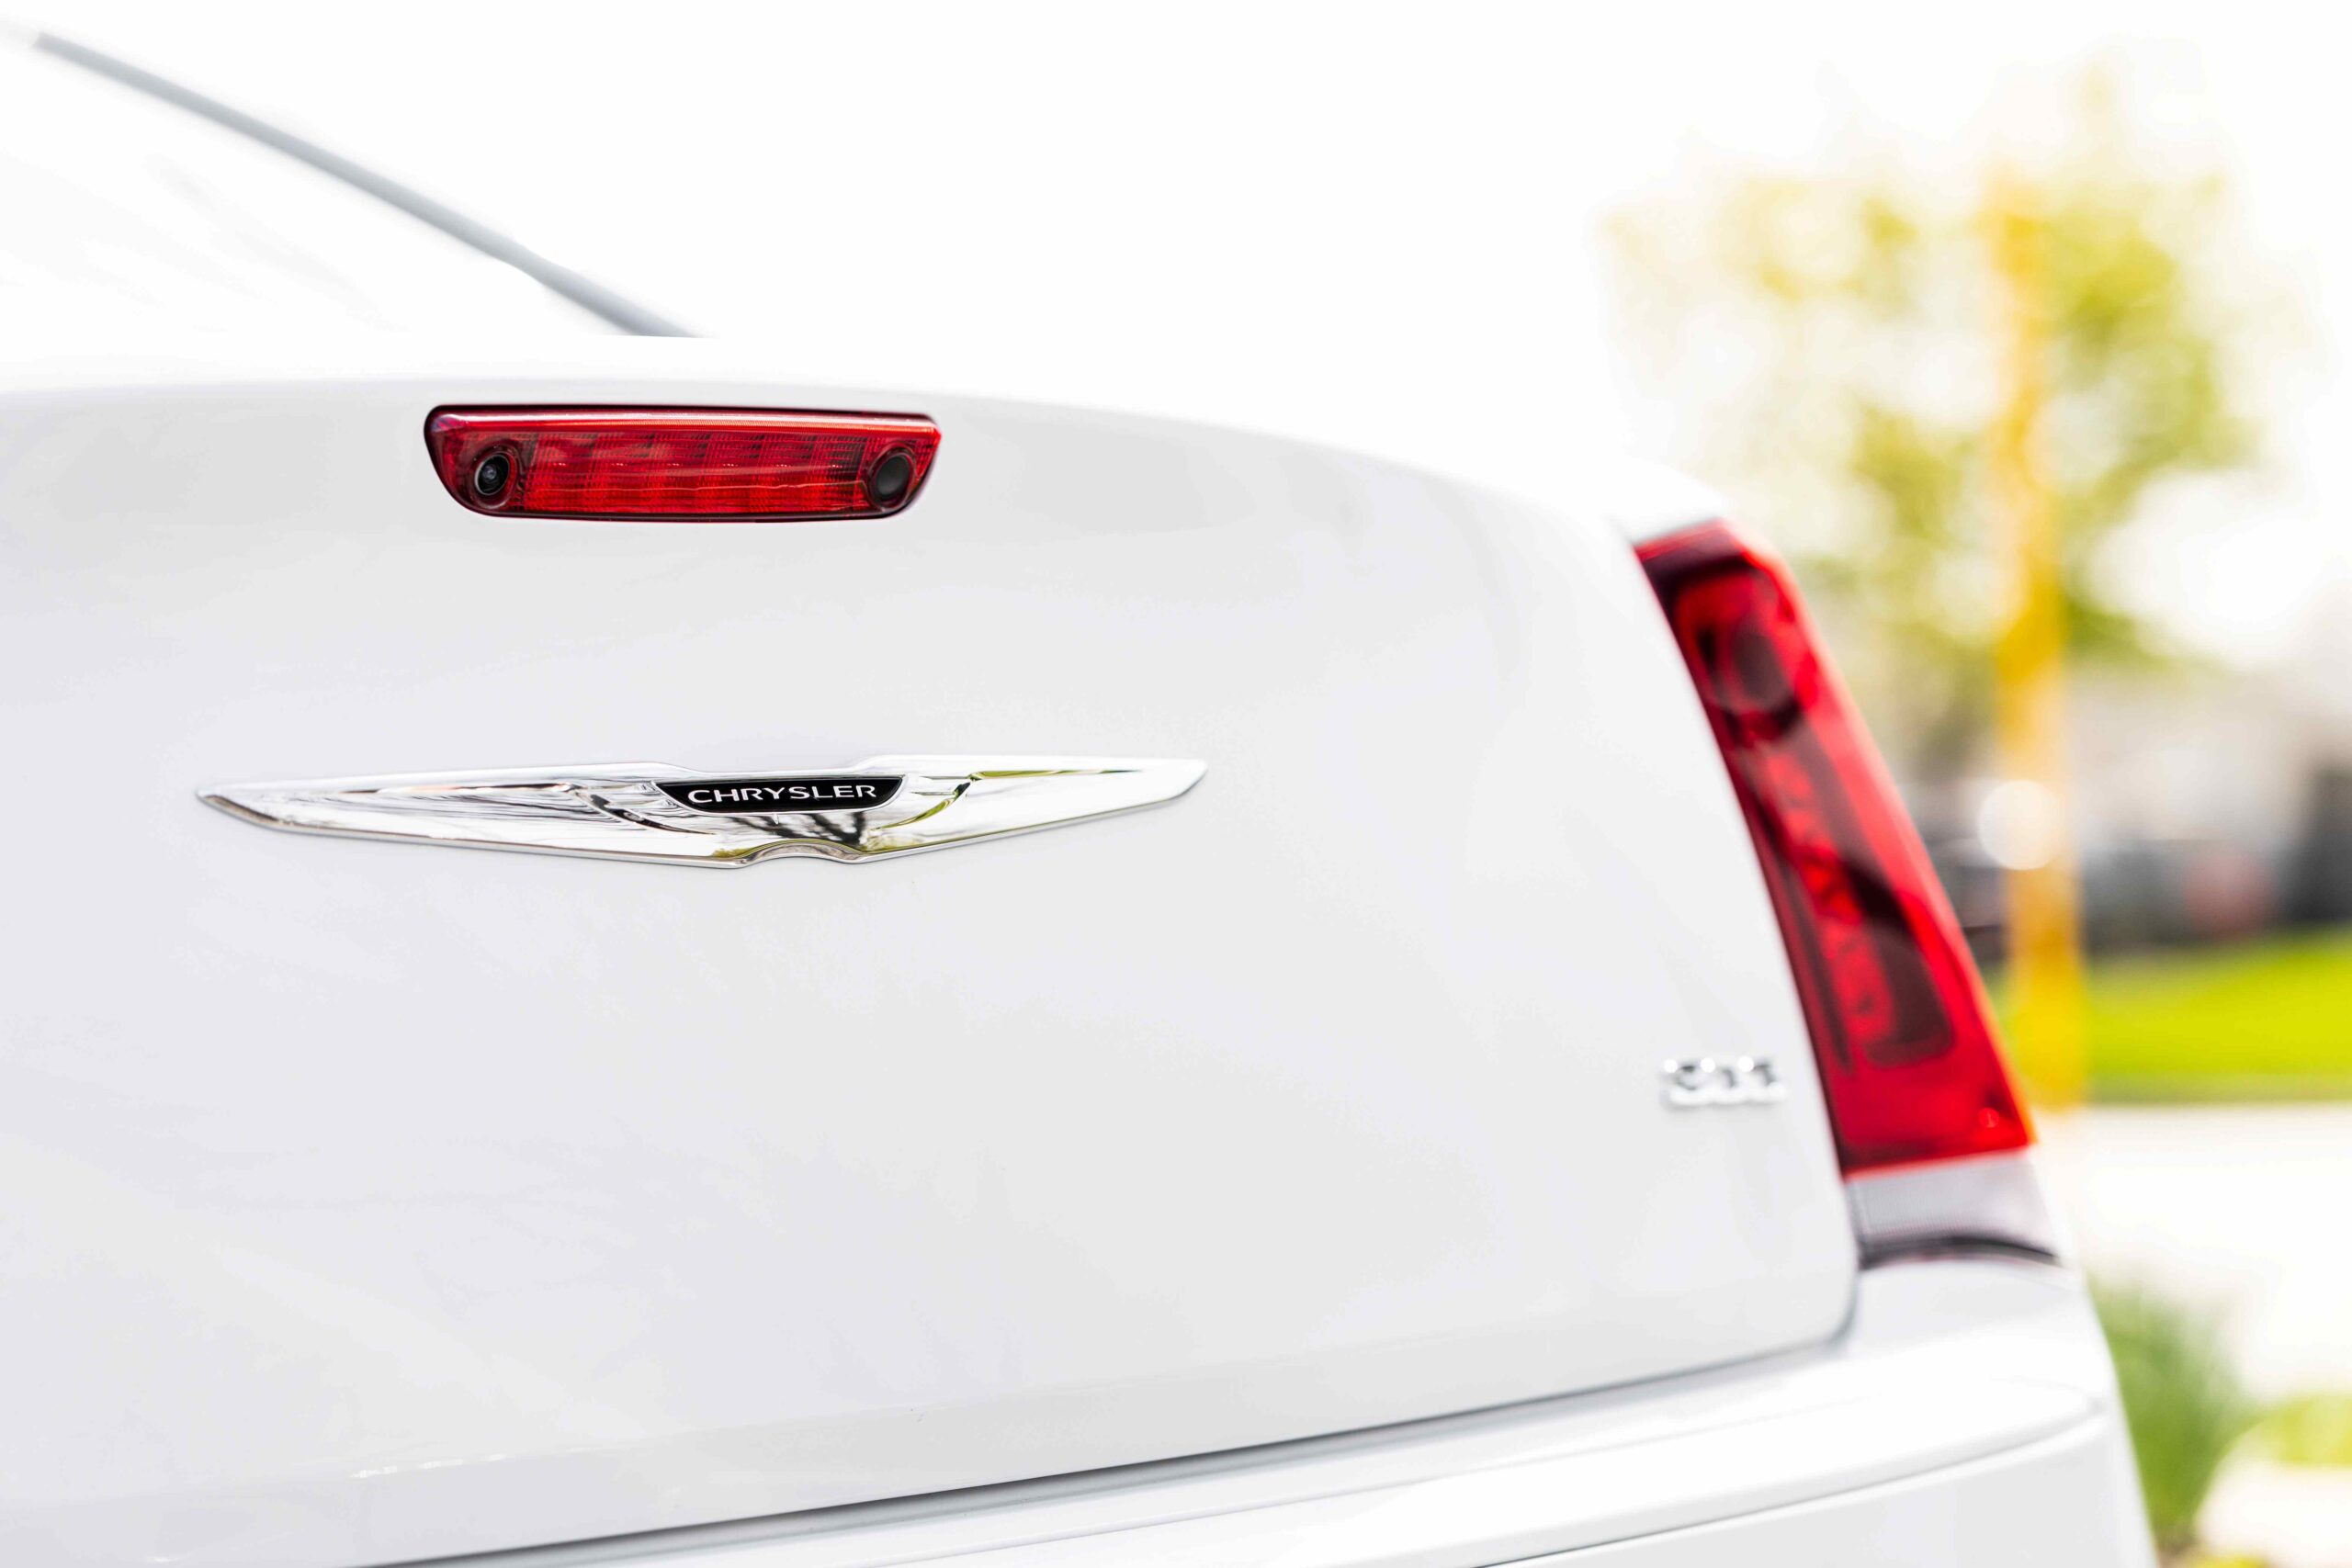 Chrysler 300C AWD is America's Bentley